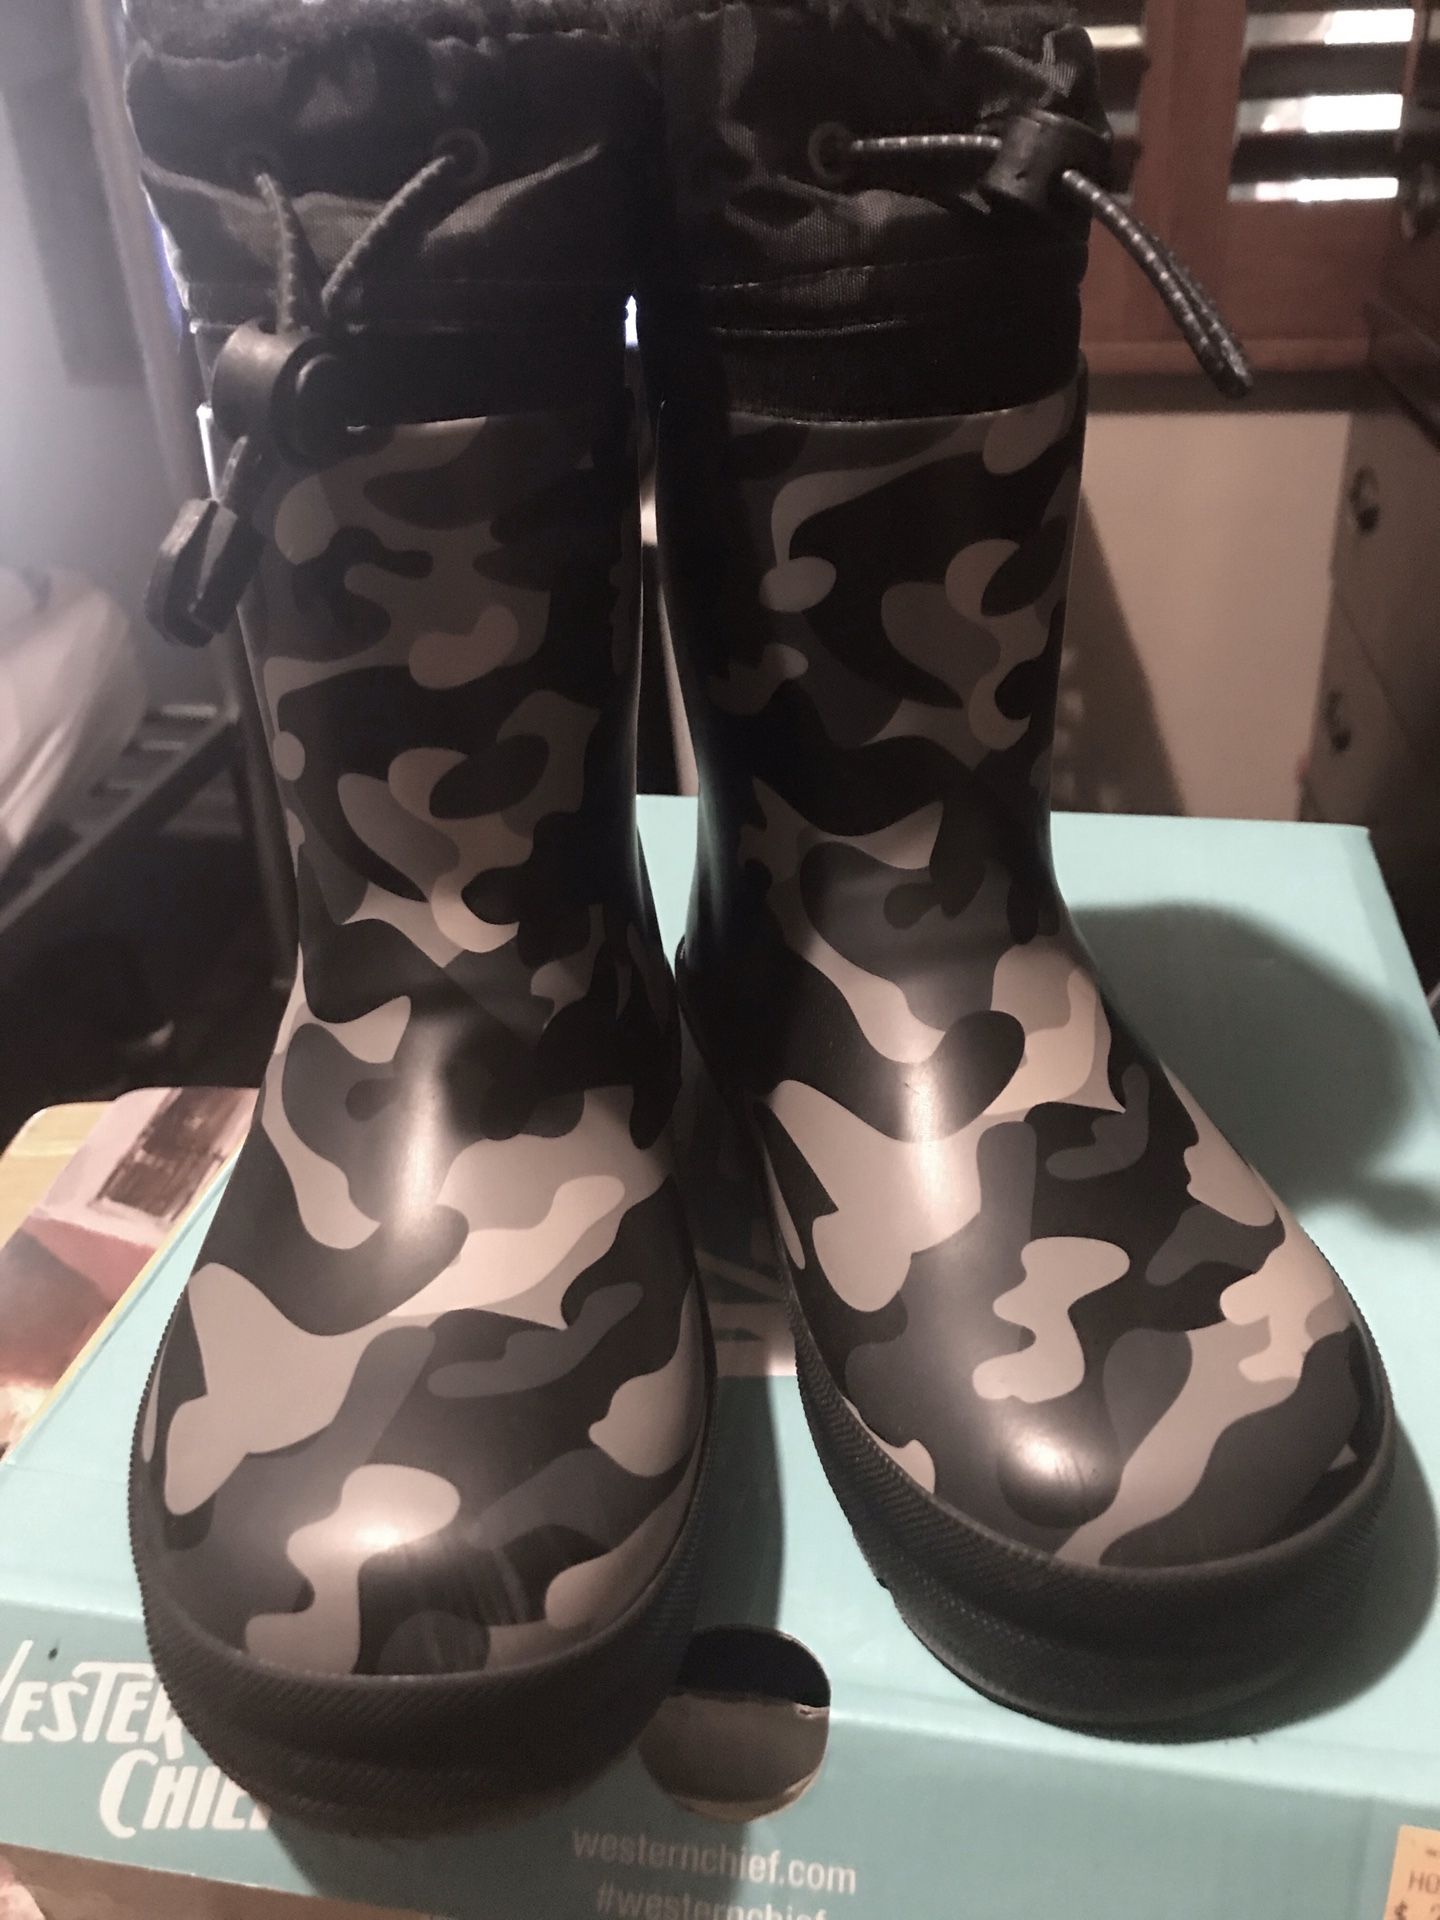 Rain snow waterproof kids boots size 11/12